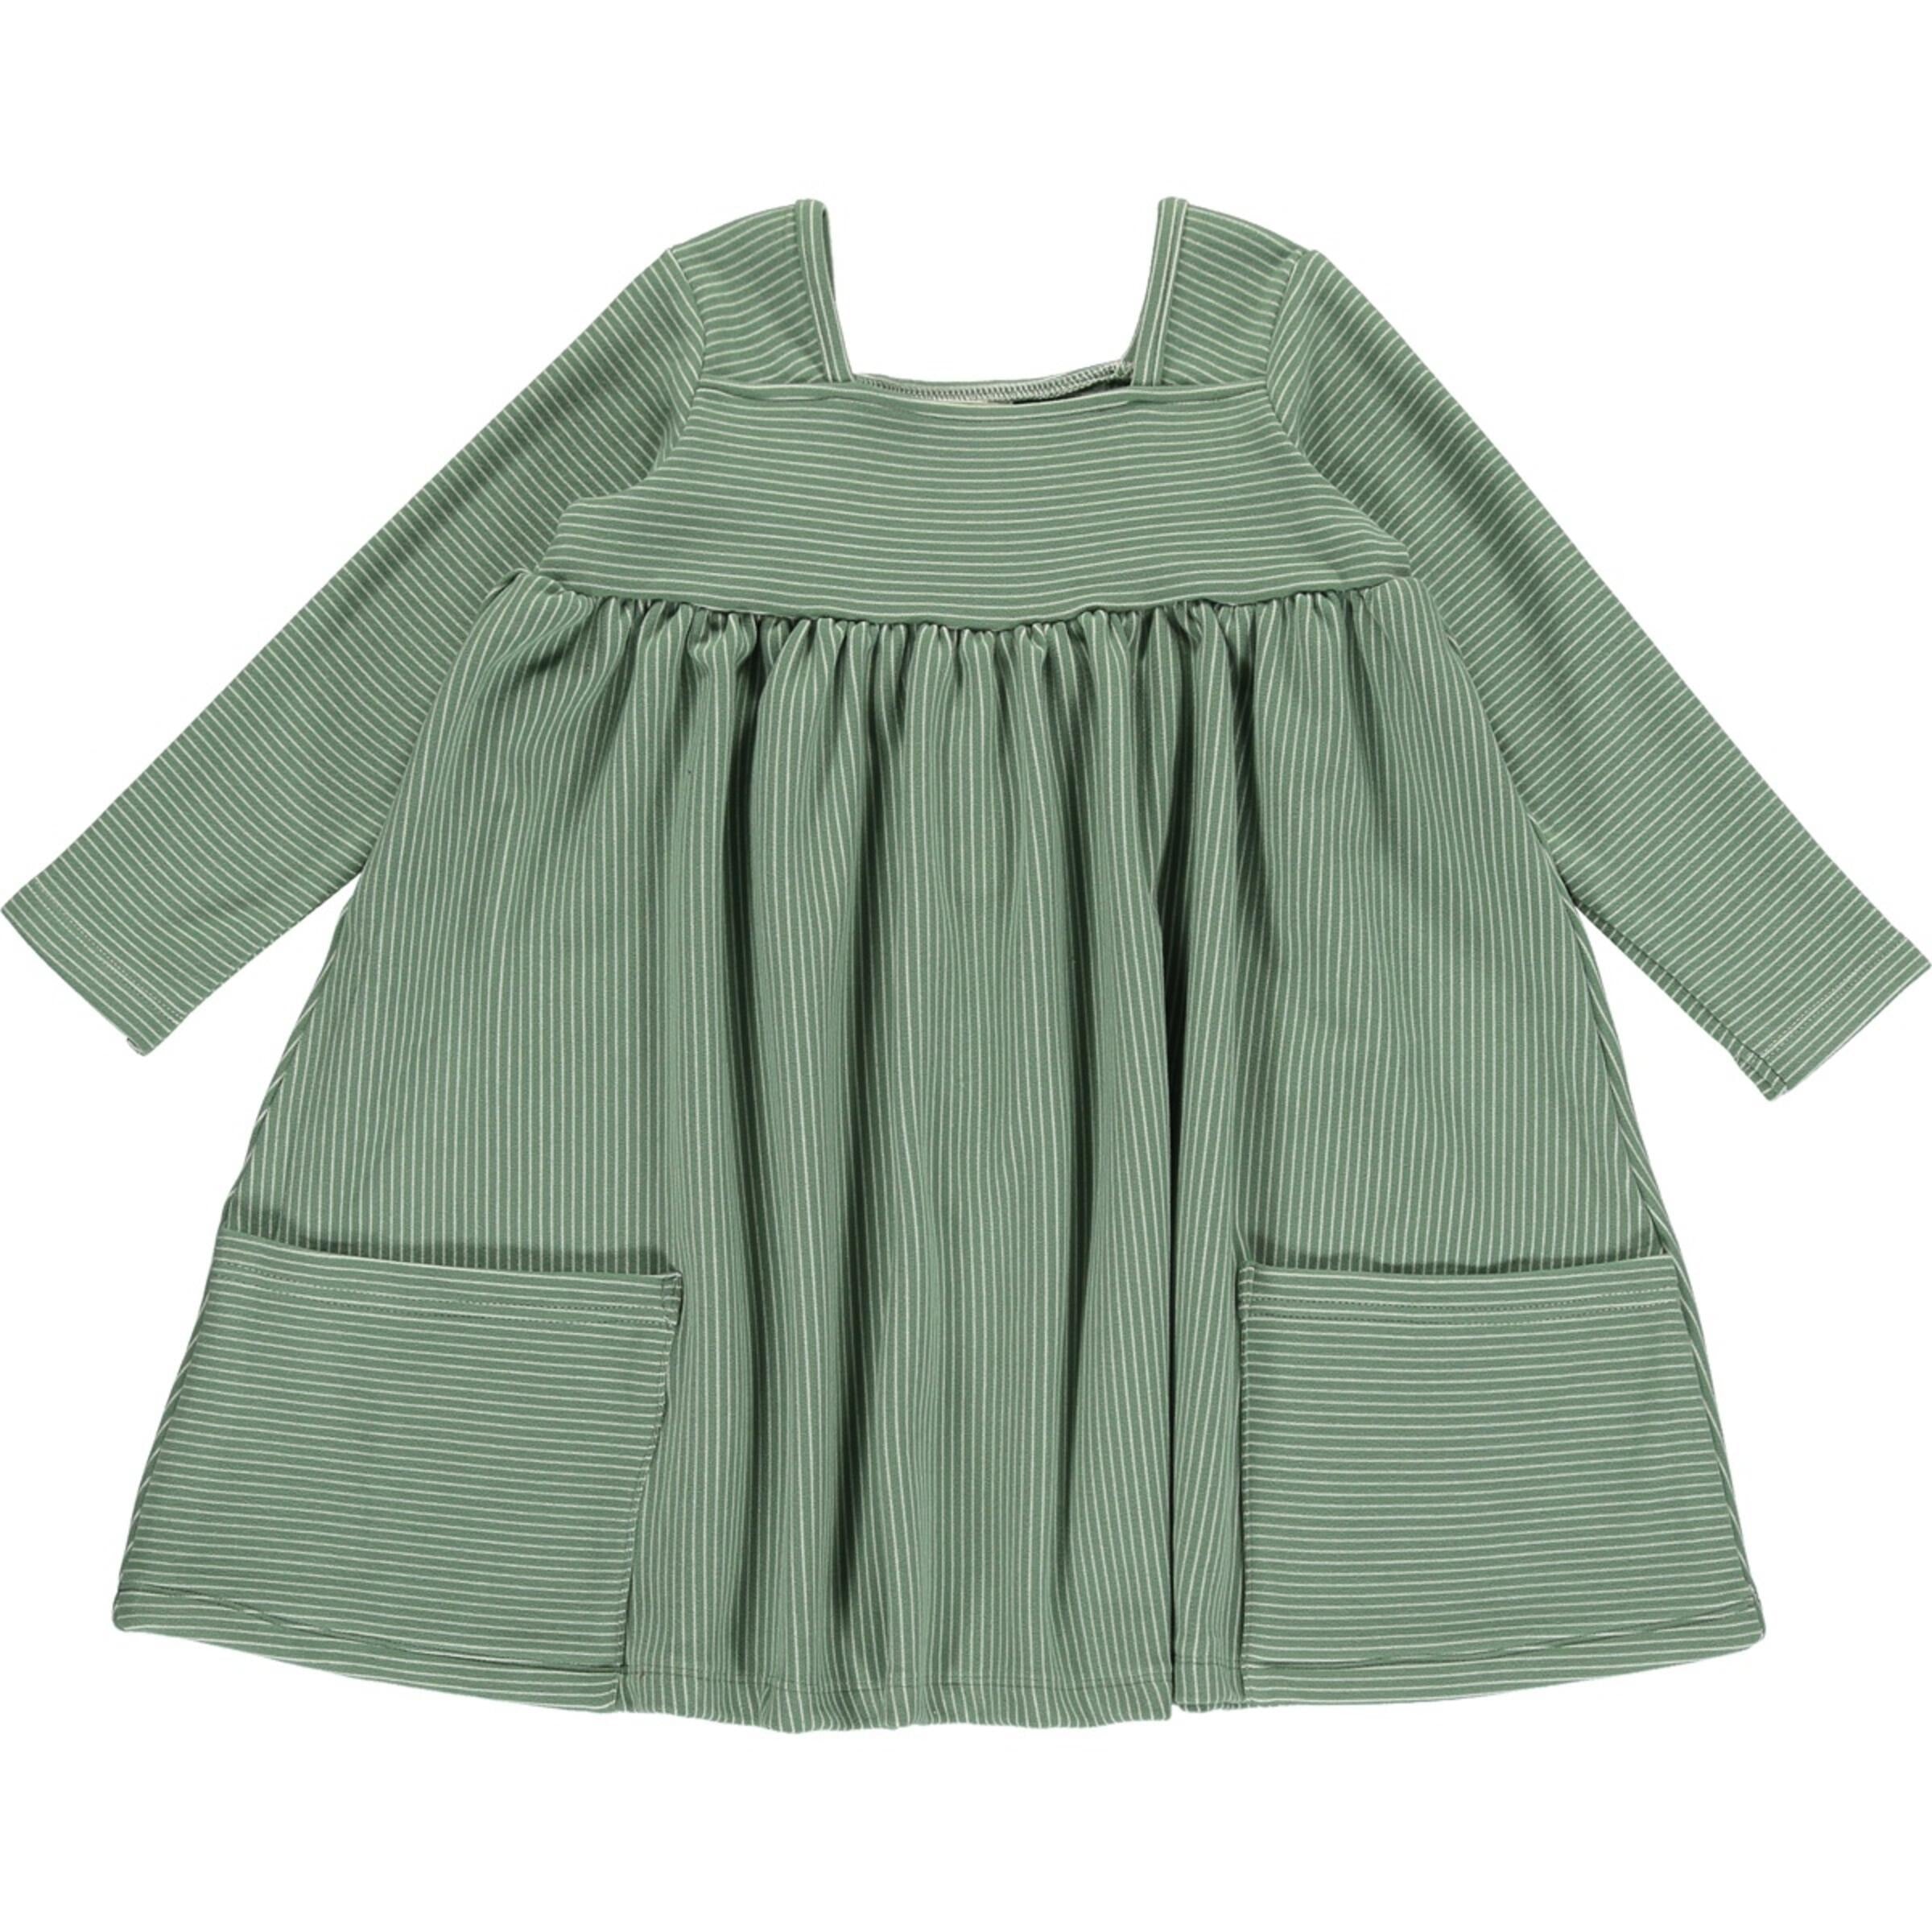 Rylie Dress - Green/Cream Stripe